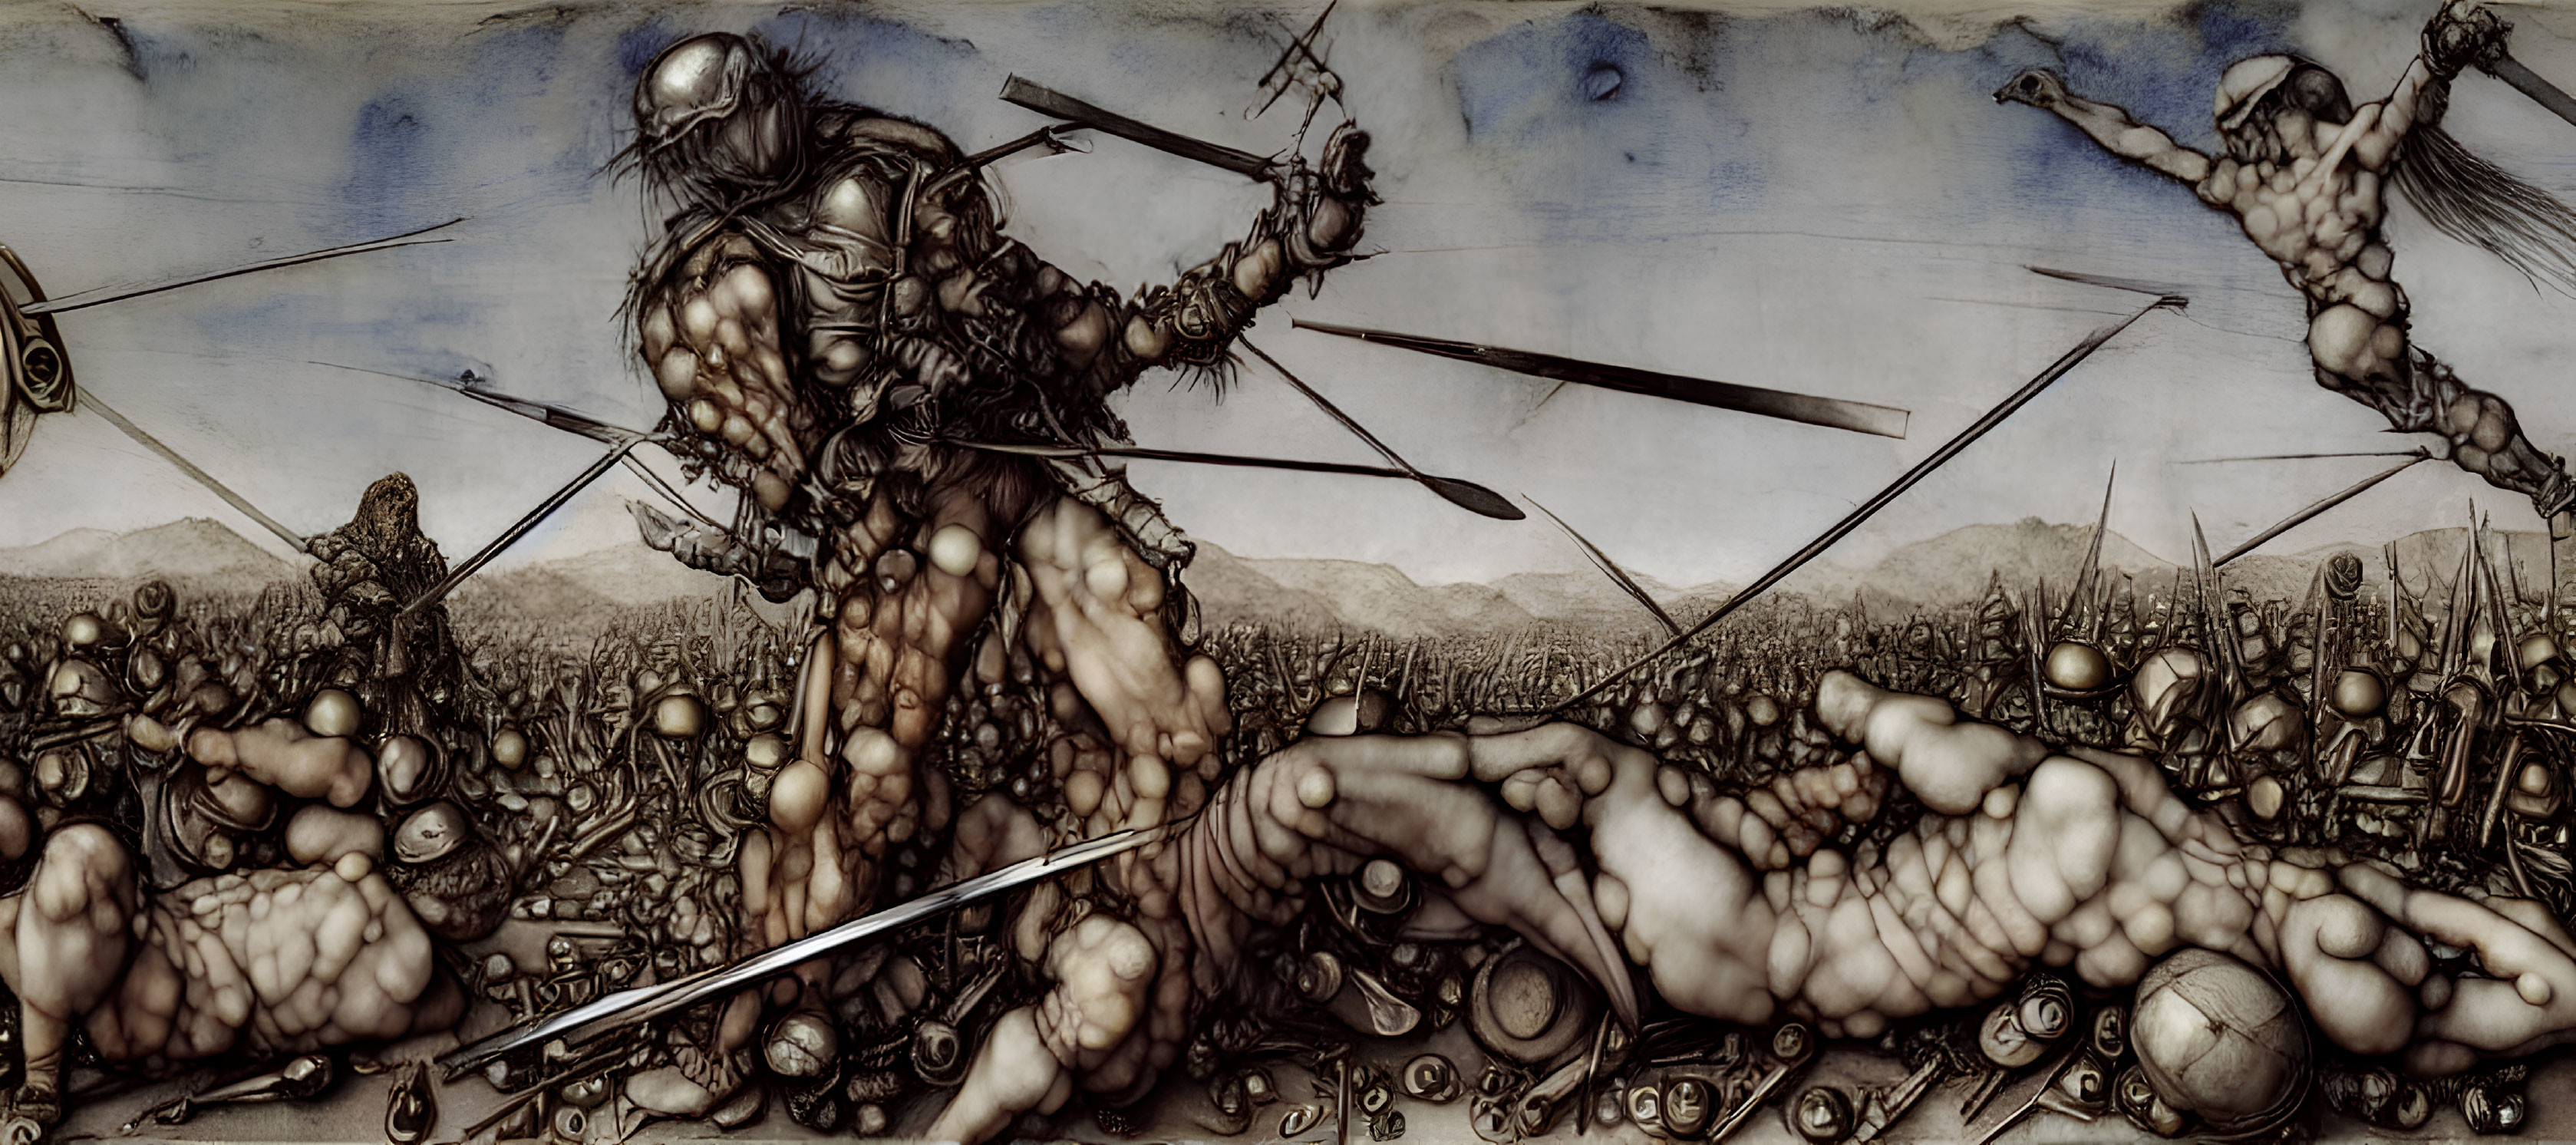 Monochromatic fantasy artwork of intense battle scene